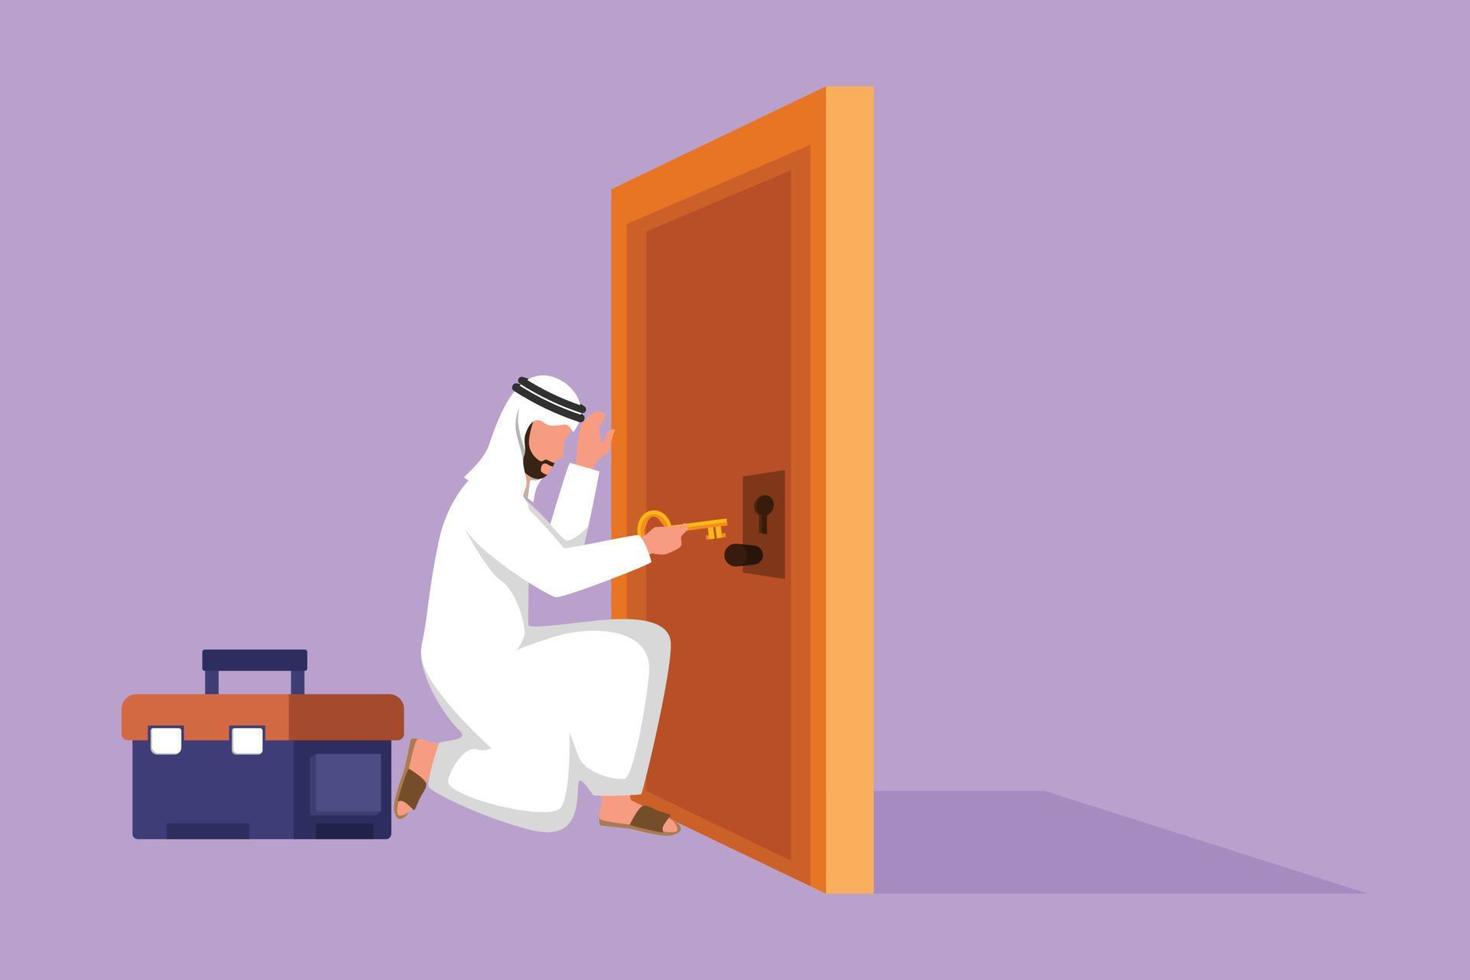 Graphic flat design drawing Arabian businessman prying doorknob with screwdriver. Man repair broken handle door knob with handyman tool in tool box. Success business. Cartoon style vector illustration